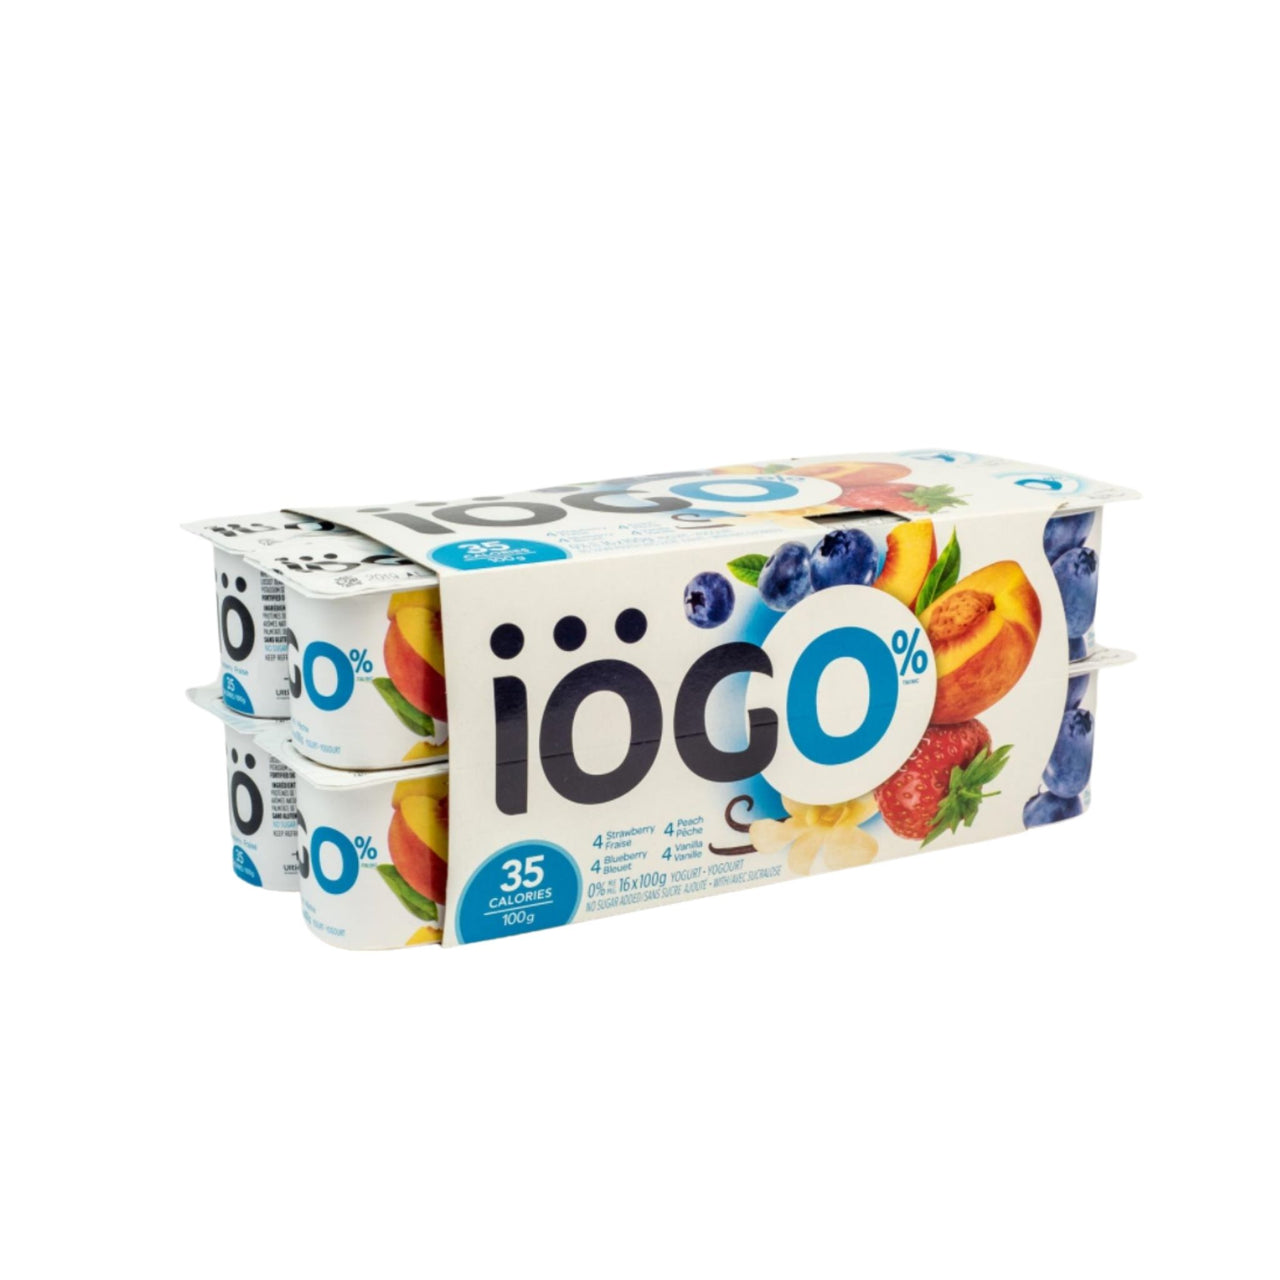 Image of IOGO 0% Yogurt 24-pack